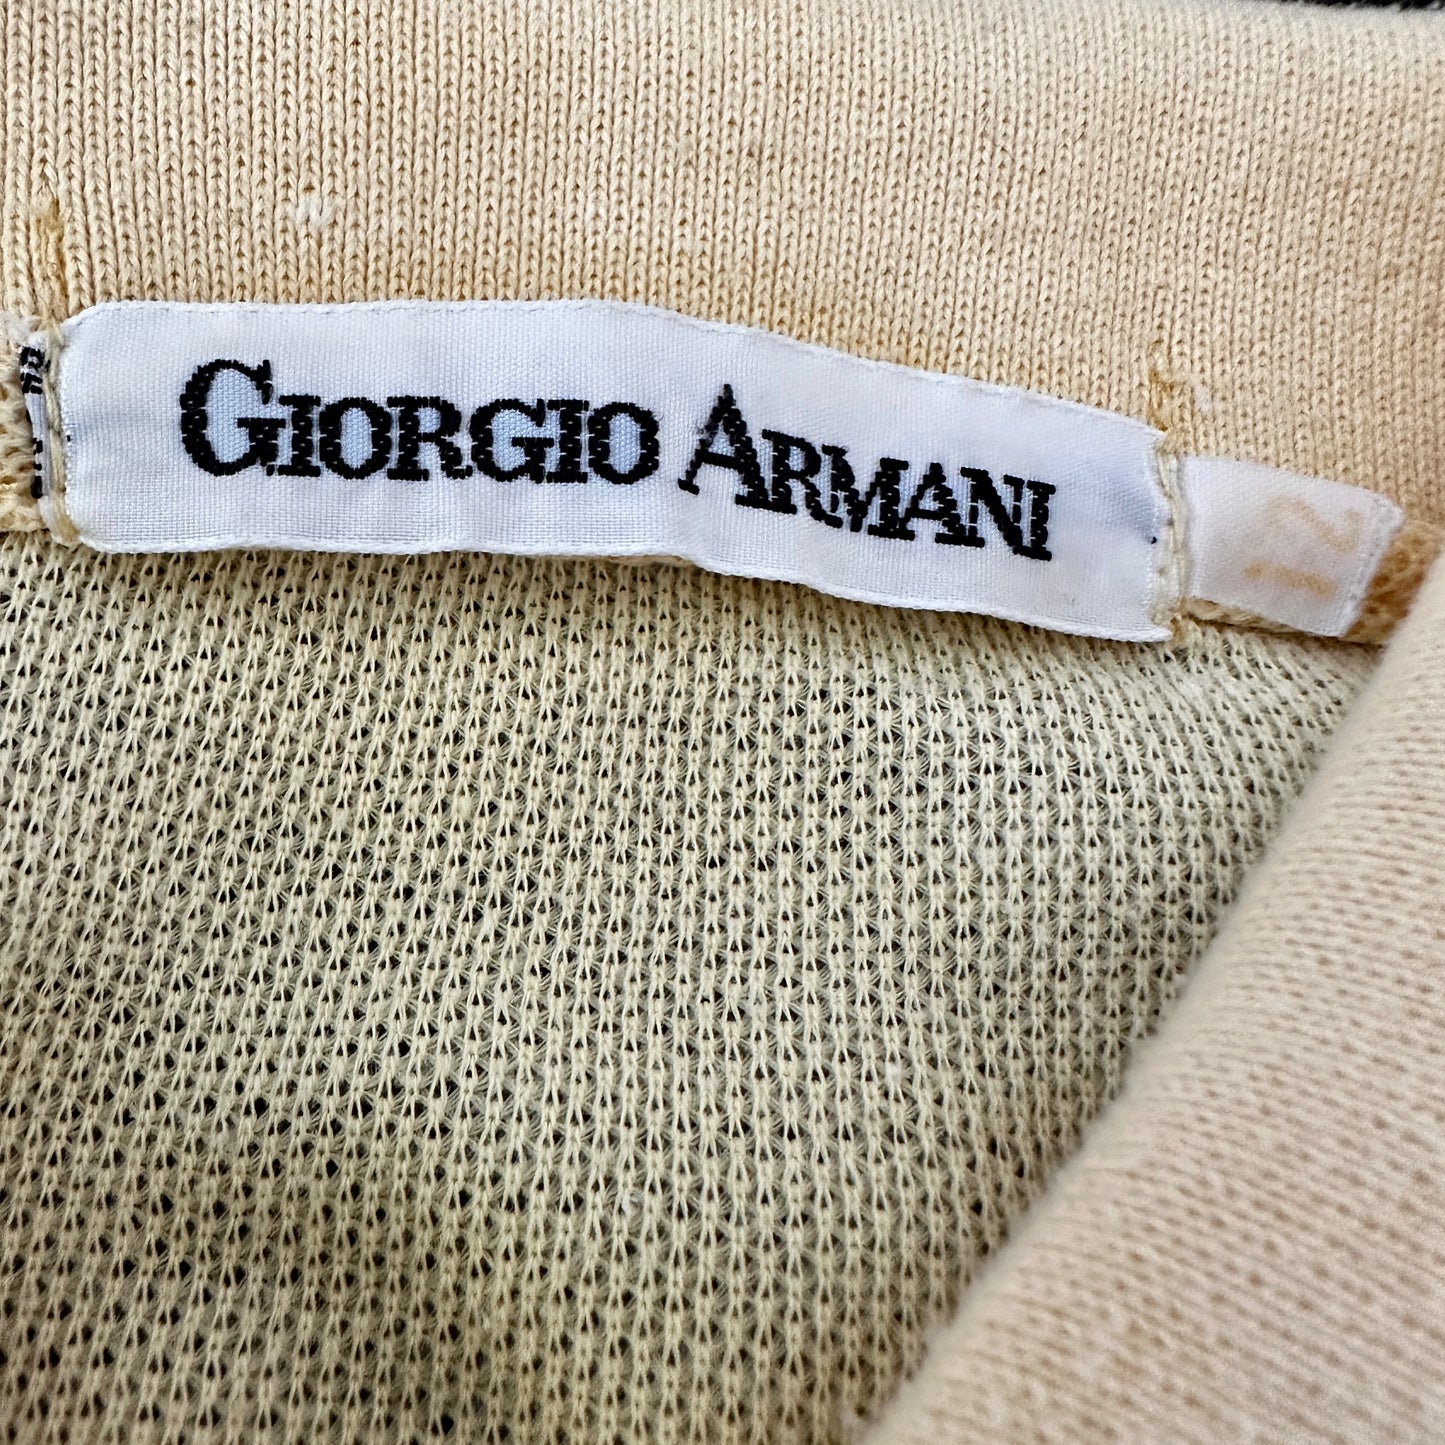 Giorgio Armani Vintage 80s Golden Eagle Polo Shirt - M - Made in Italy